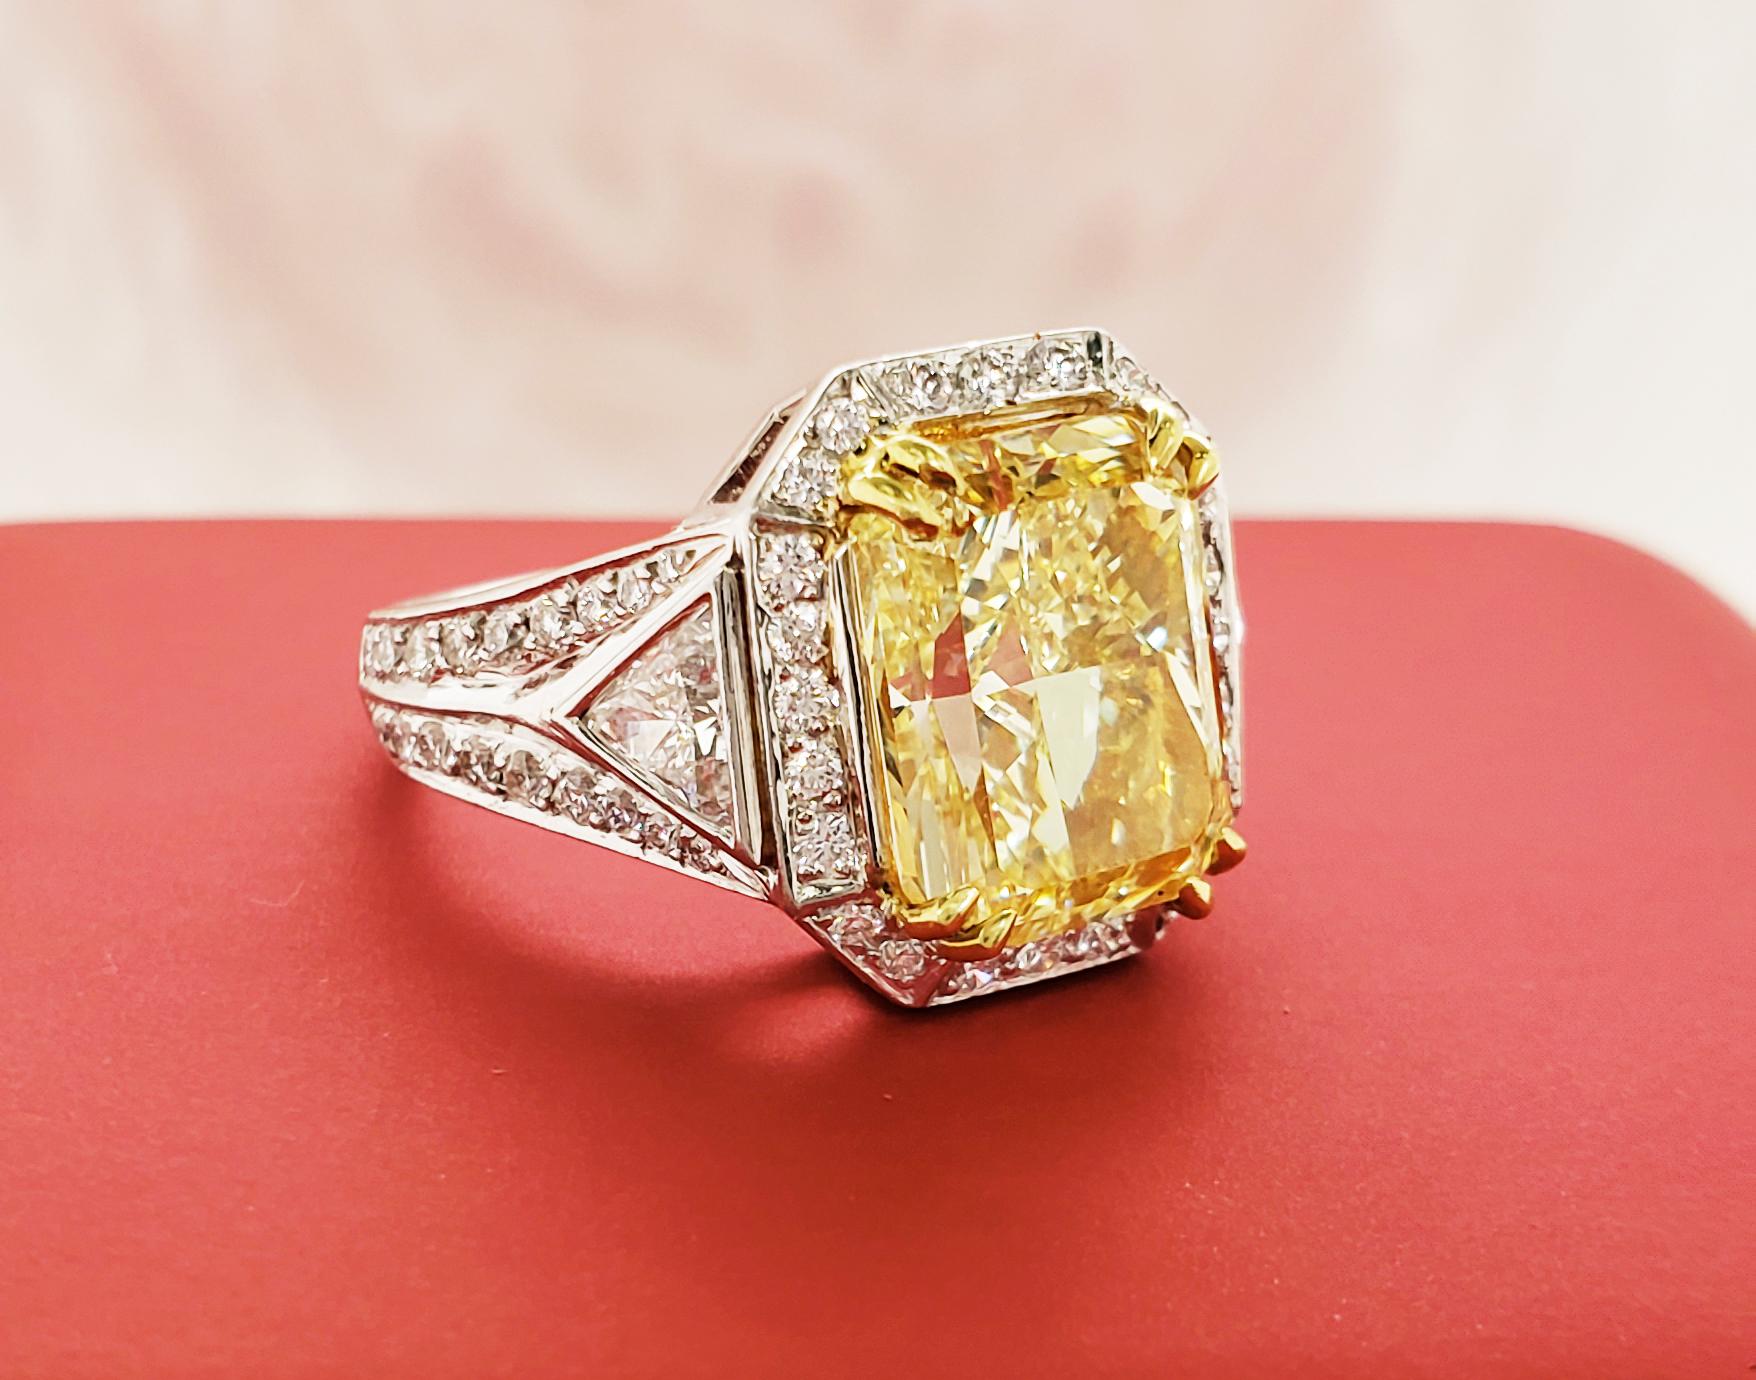 Scarselli 6.35 Carat Fancy Yellow Radiant Diamond Ring in Platinum GIA Certified 1